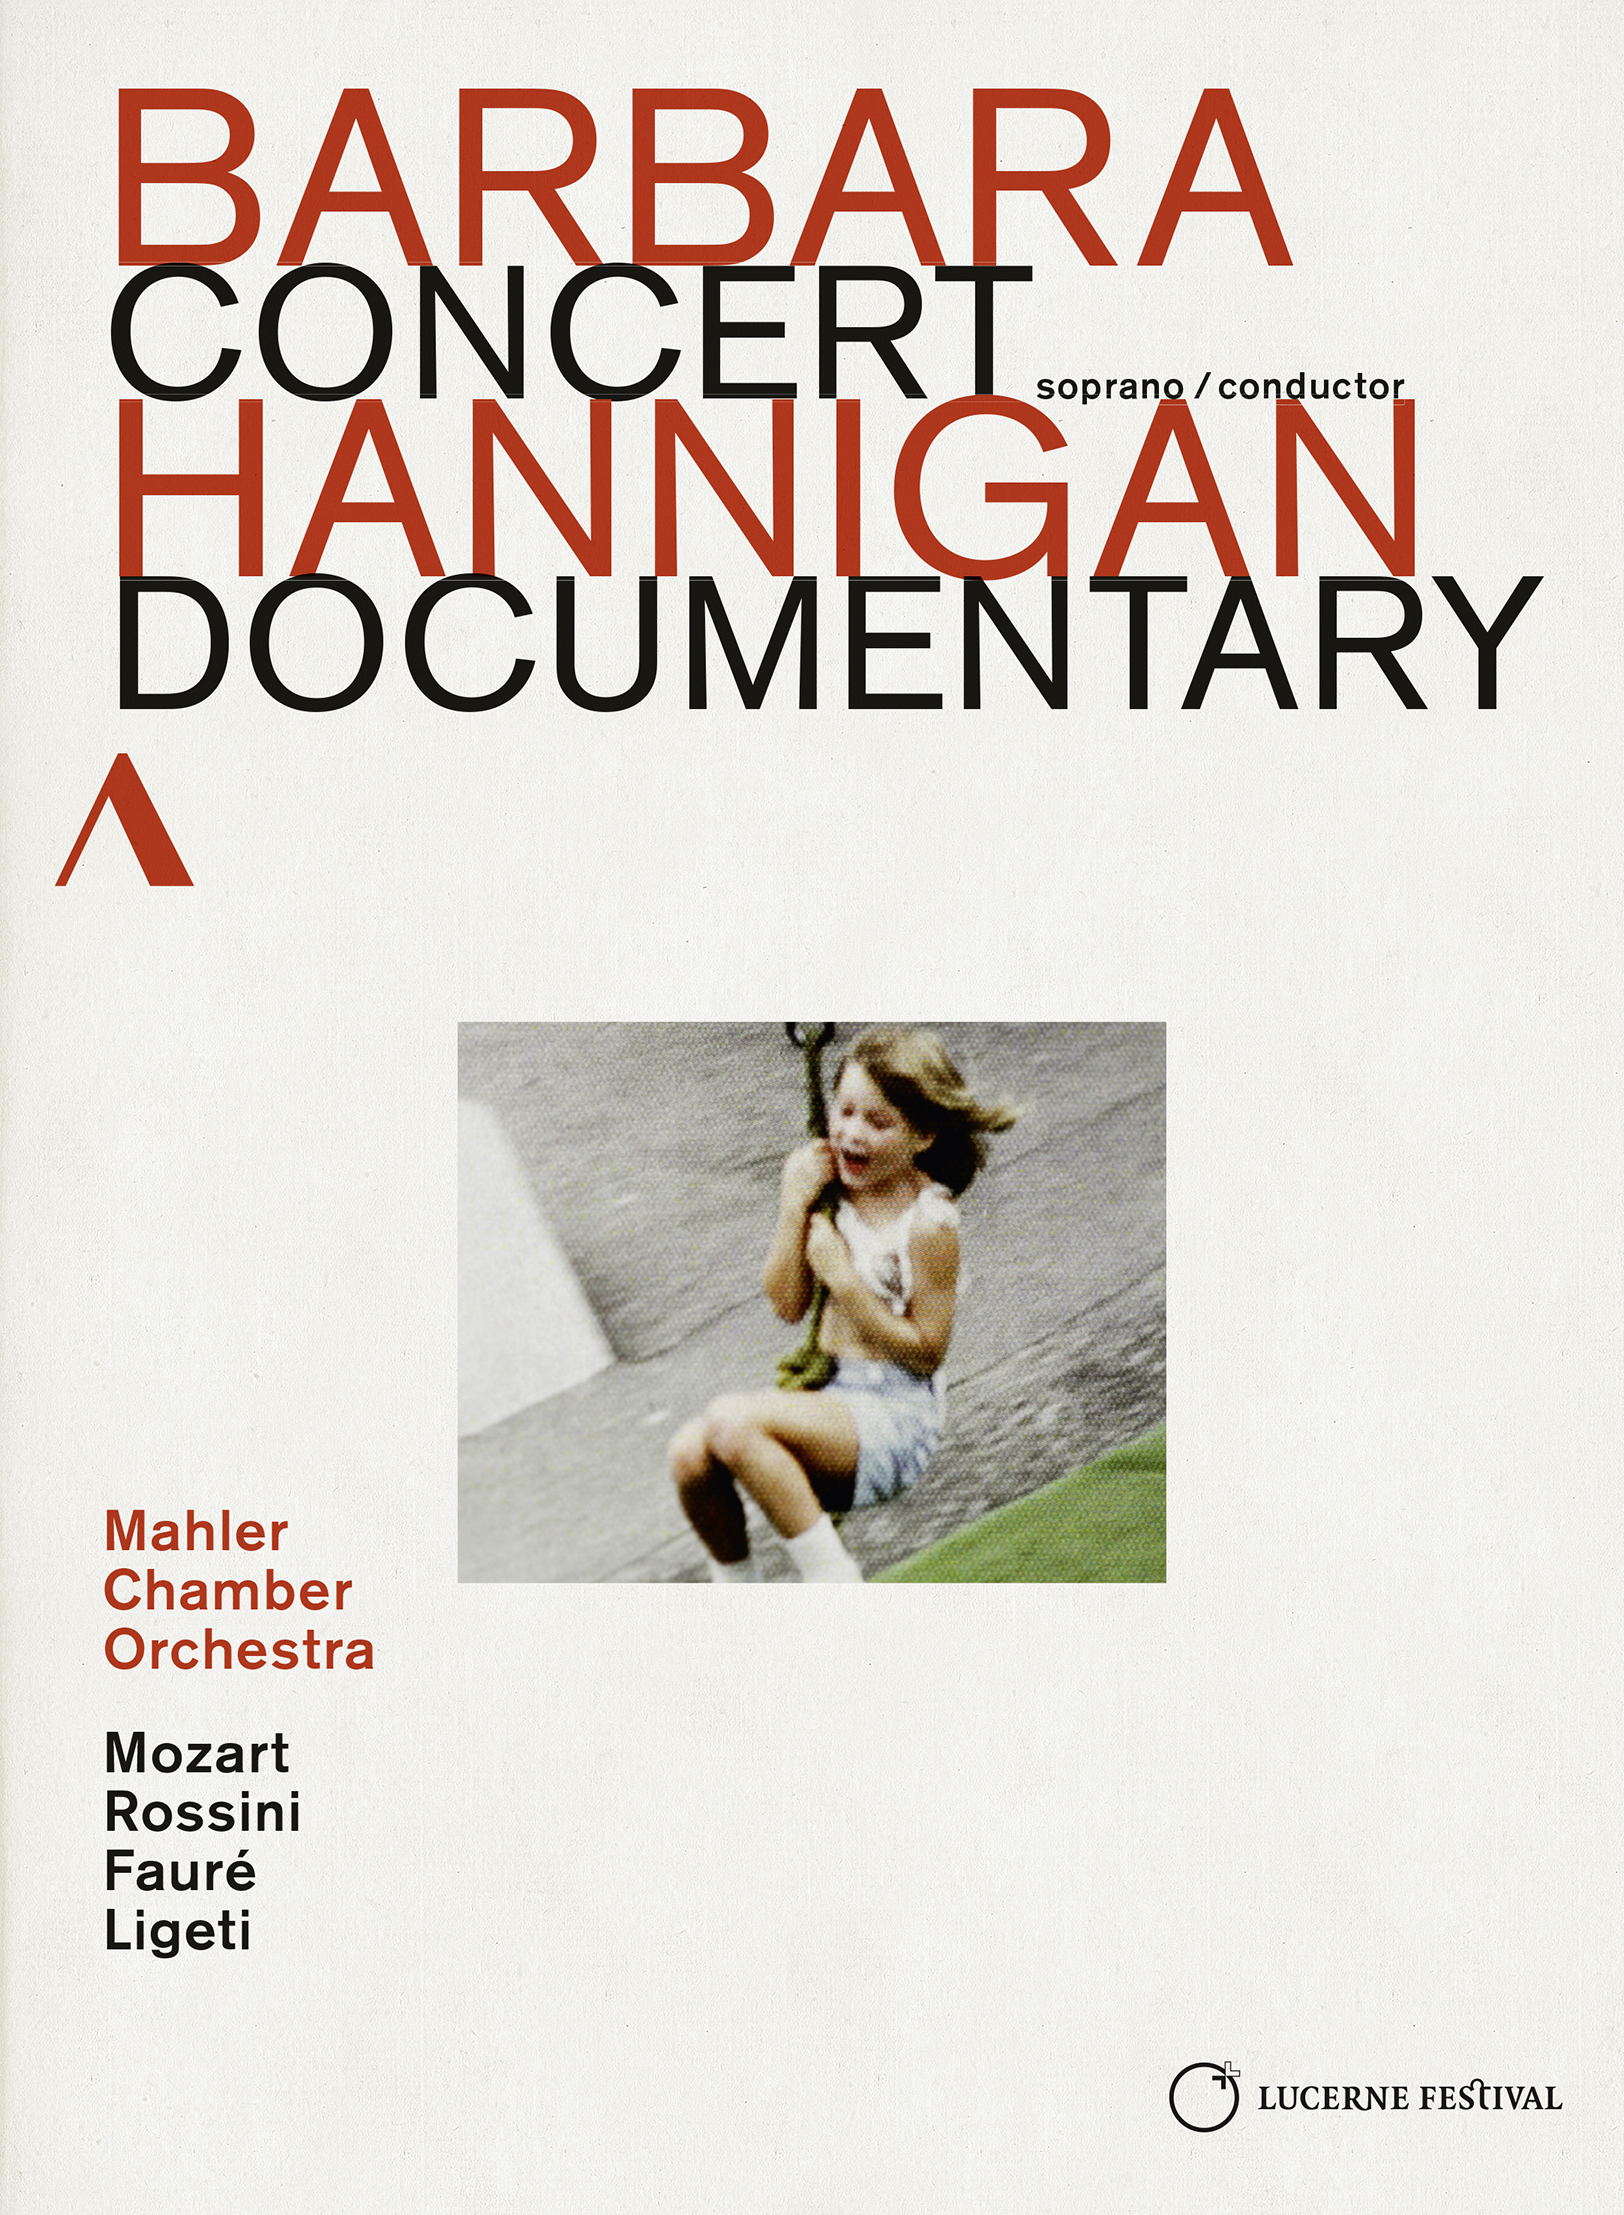 Mahler chamber orchestra. Барбара (DVD). Barba the Concert двд диск. Concert Documentary купить книгу.